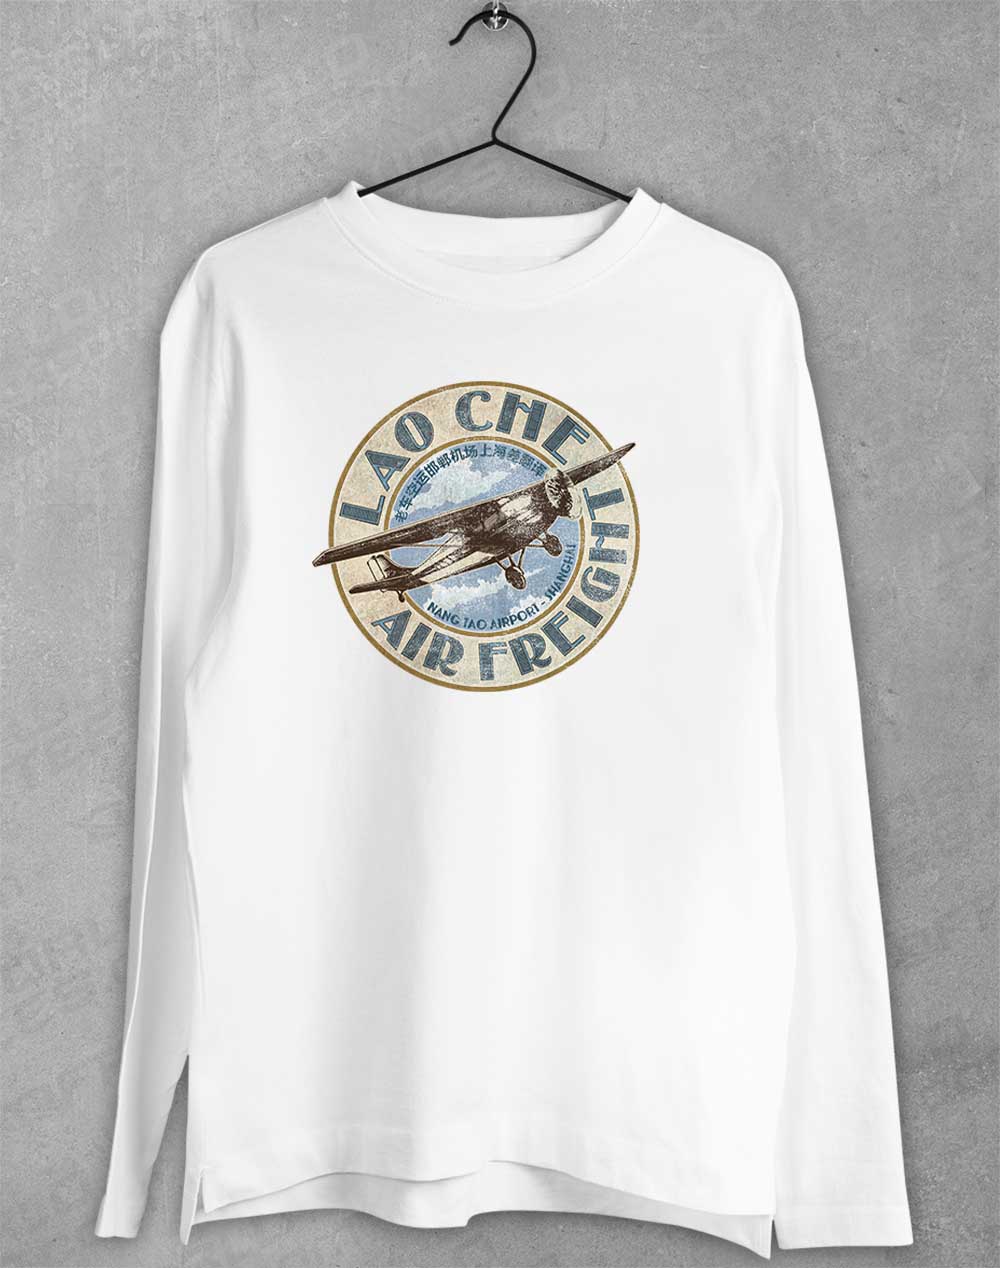 White - Lao Che Air Freight Long Sleeve T-Shirt